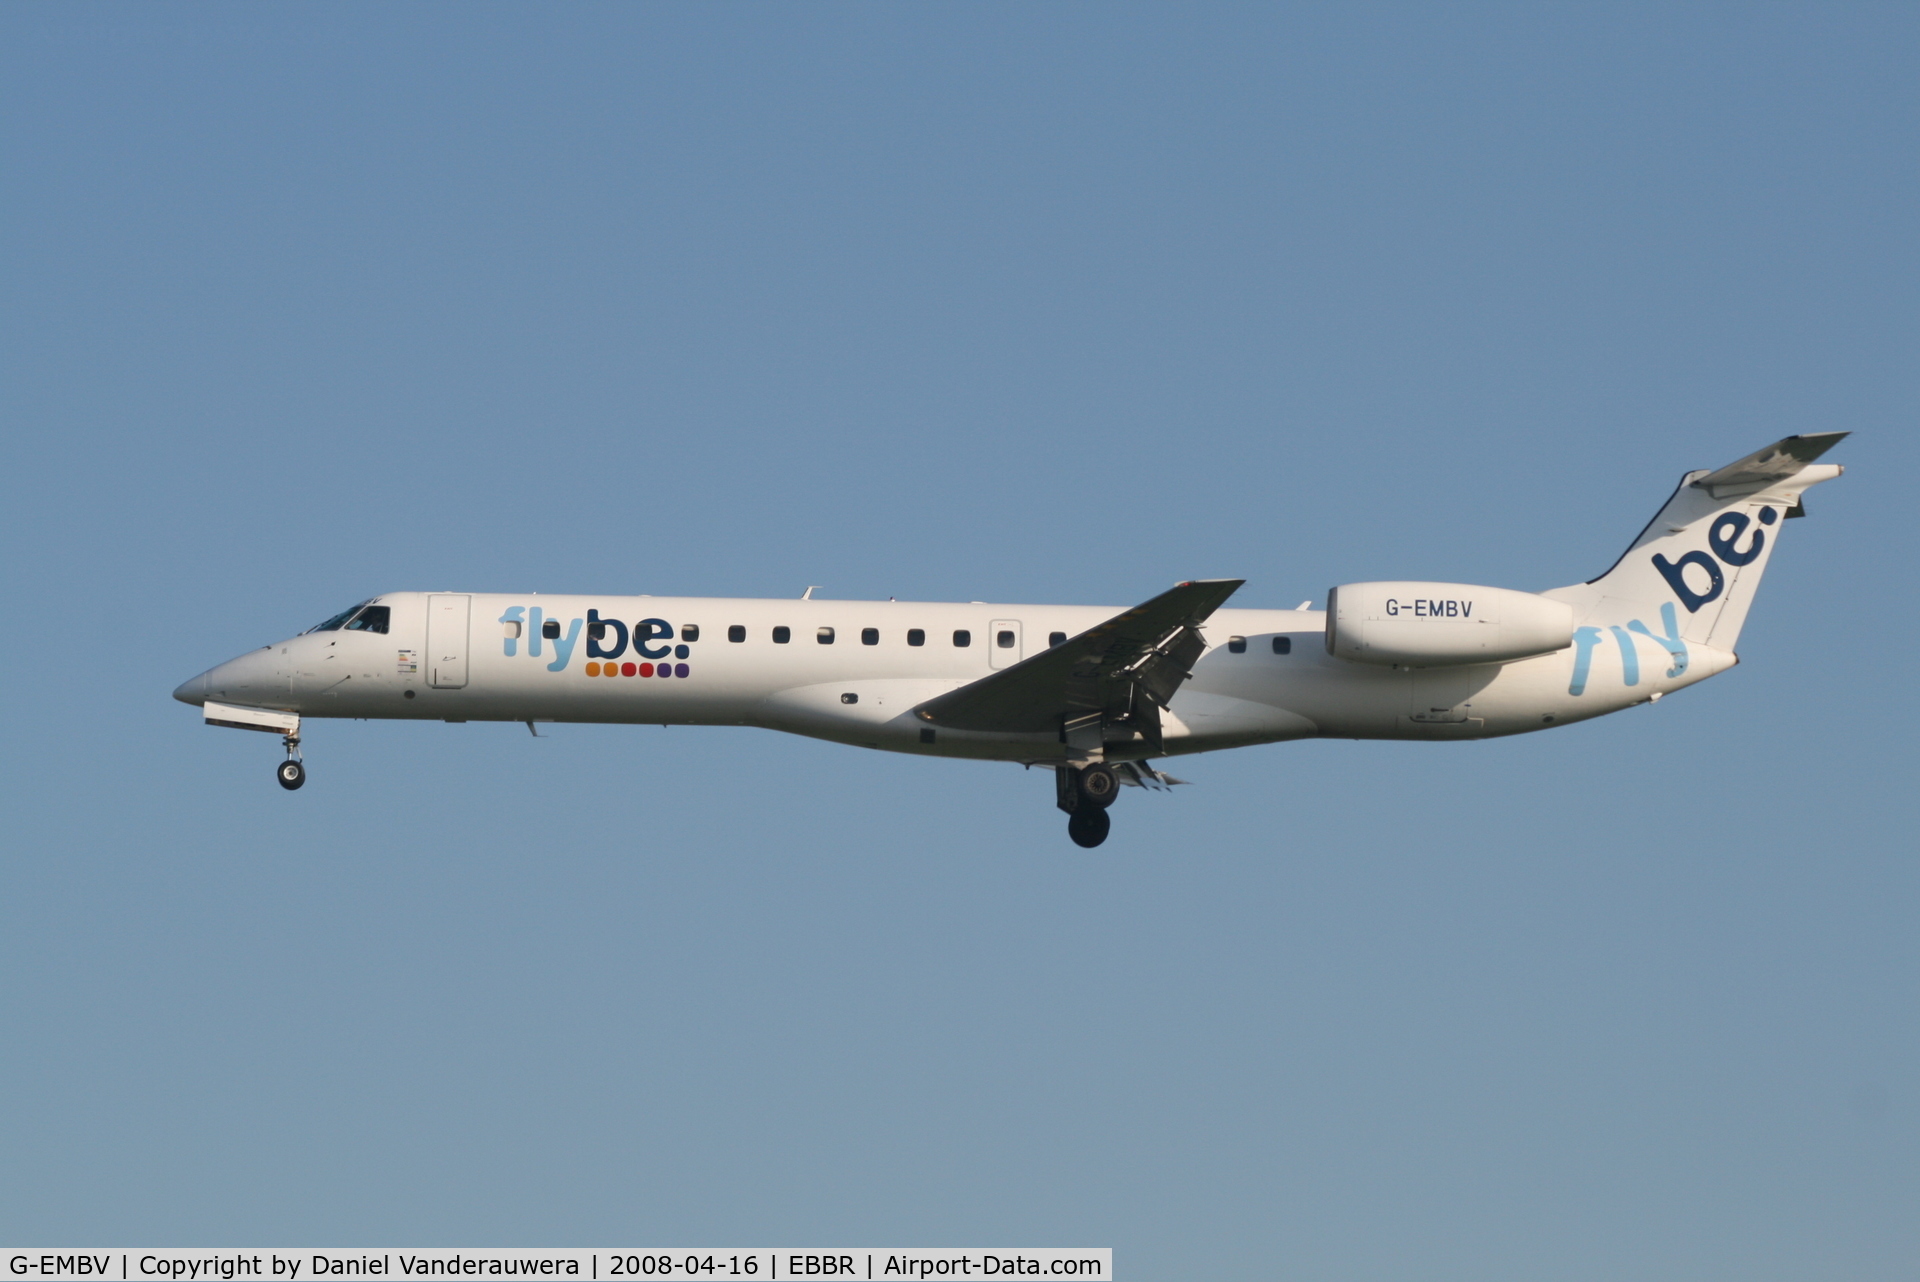 G-EMBV, 2001 Embraer EMB-145EU (ERJ-145EU) C/N 145482, arrival of flight BE7181 to rwy 25L